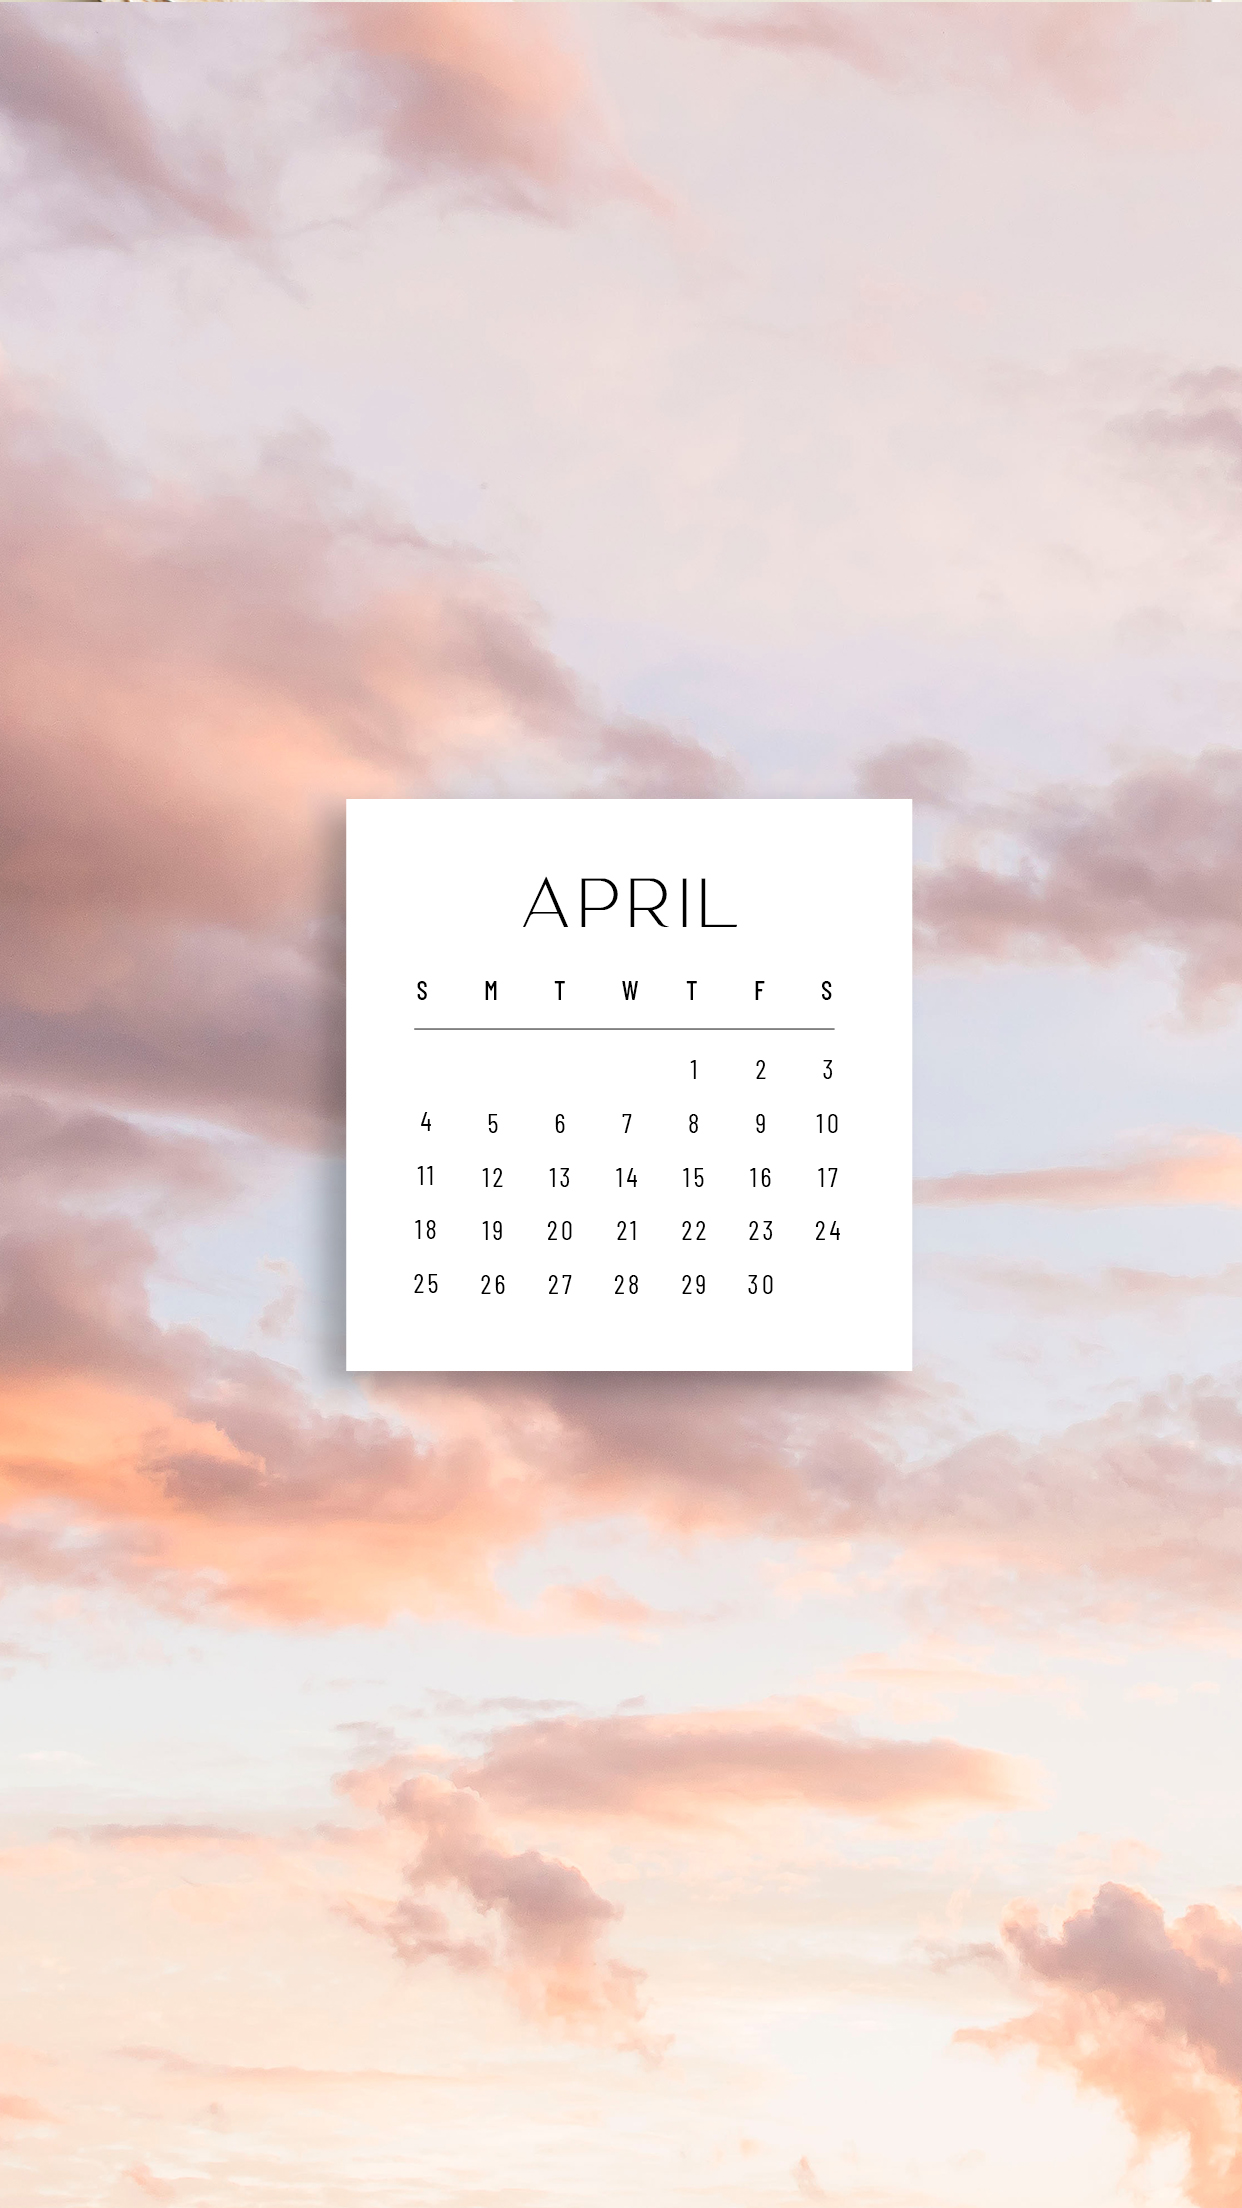 April mobile desktop wallpaper download FREE